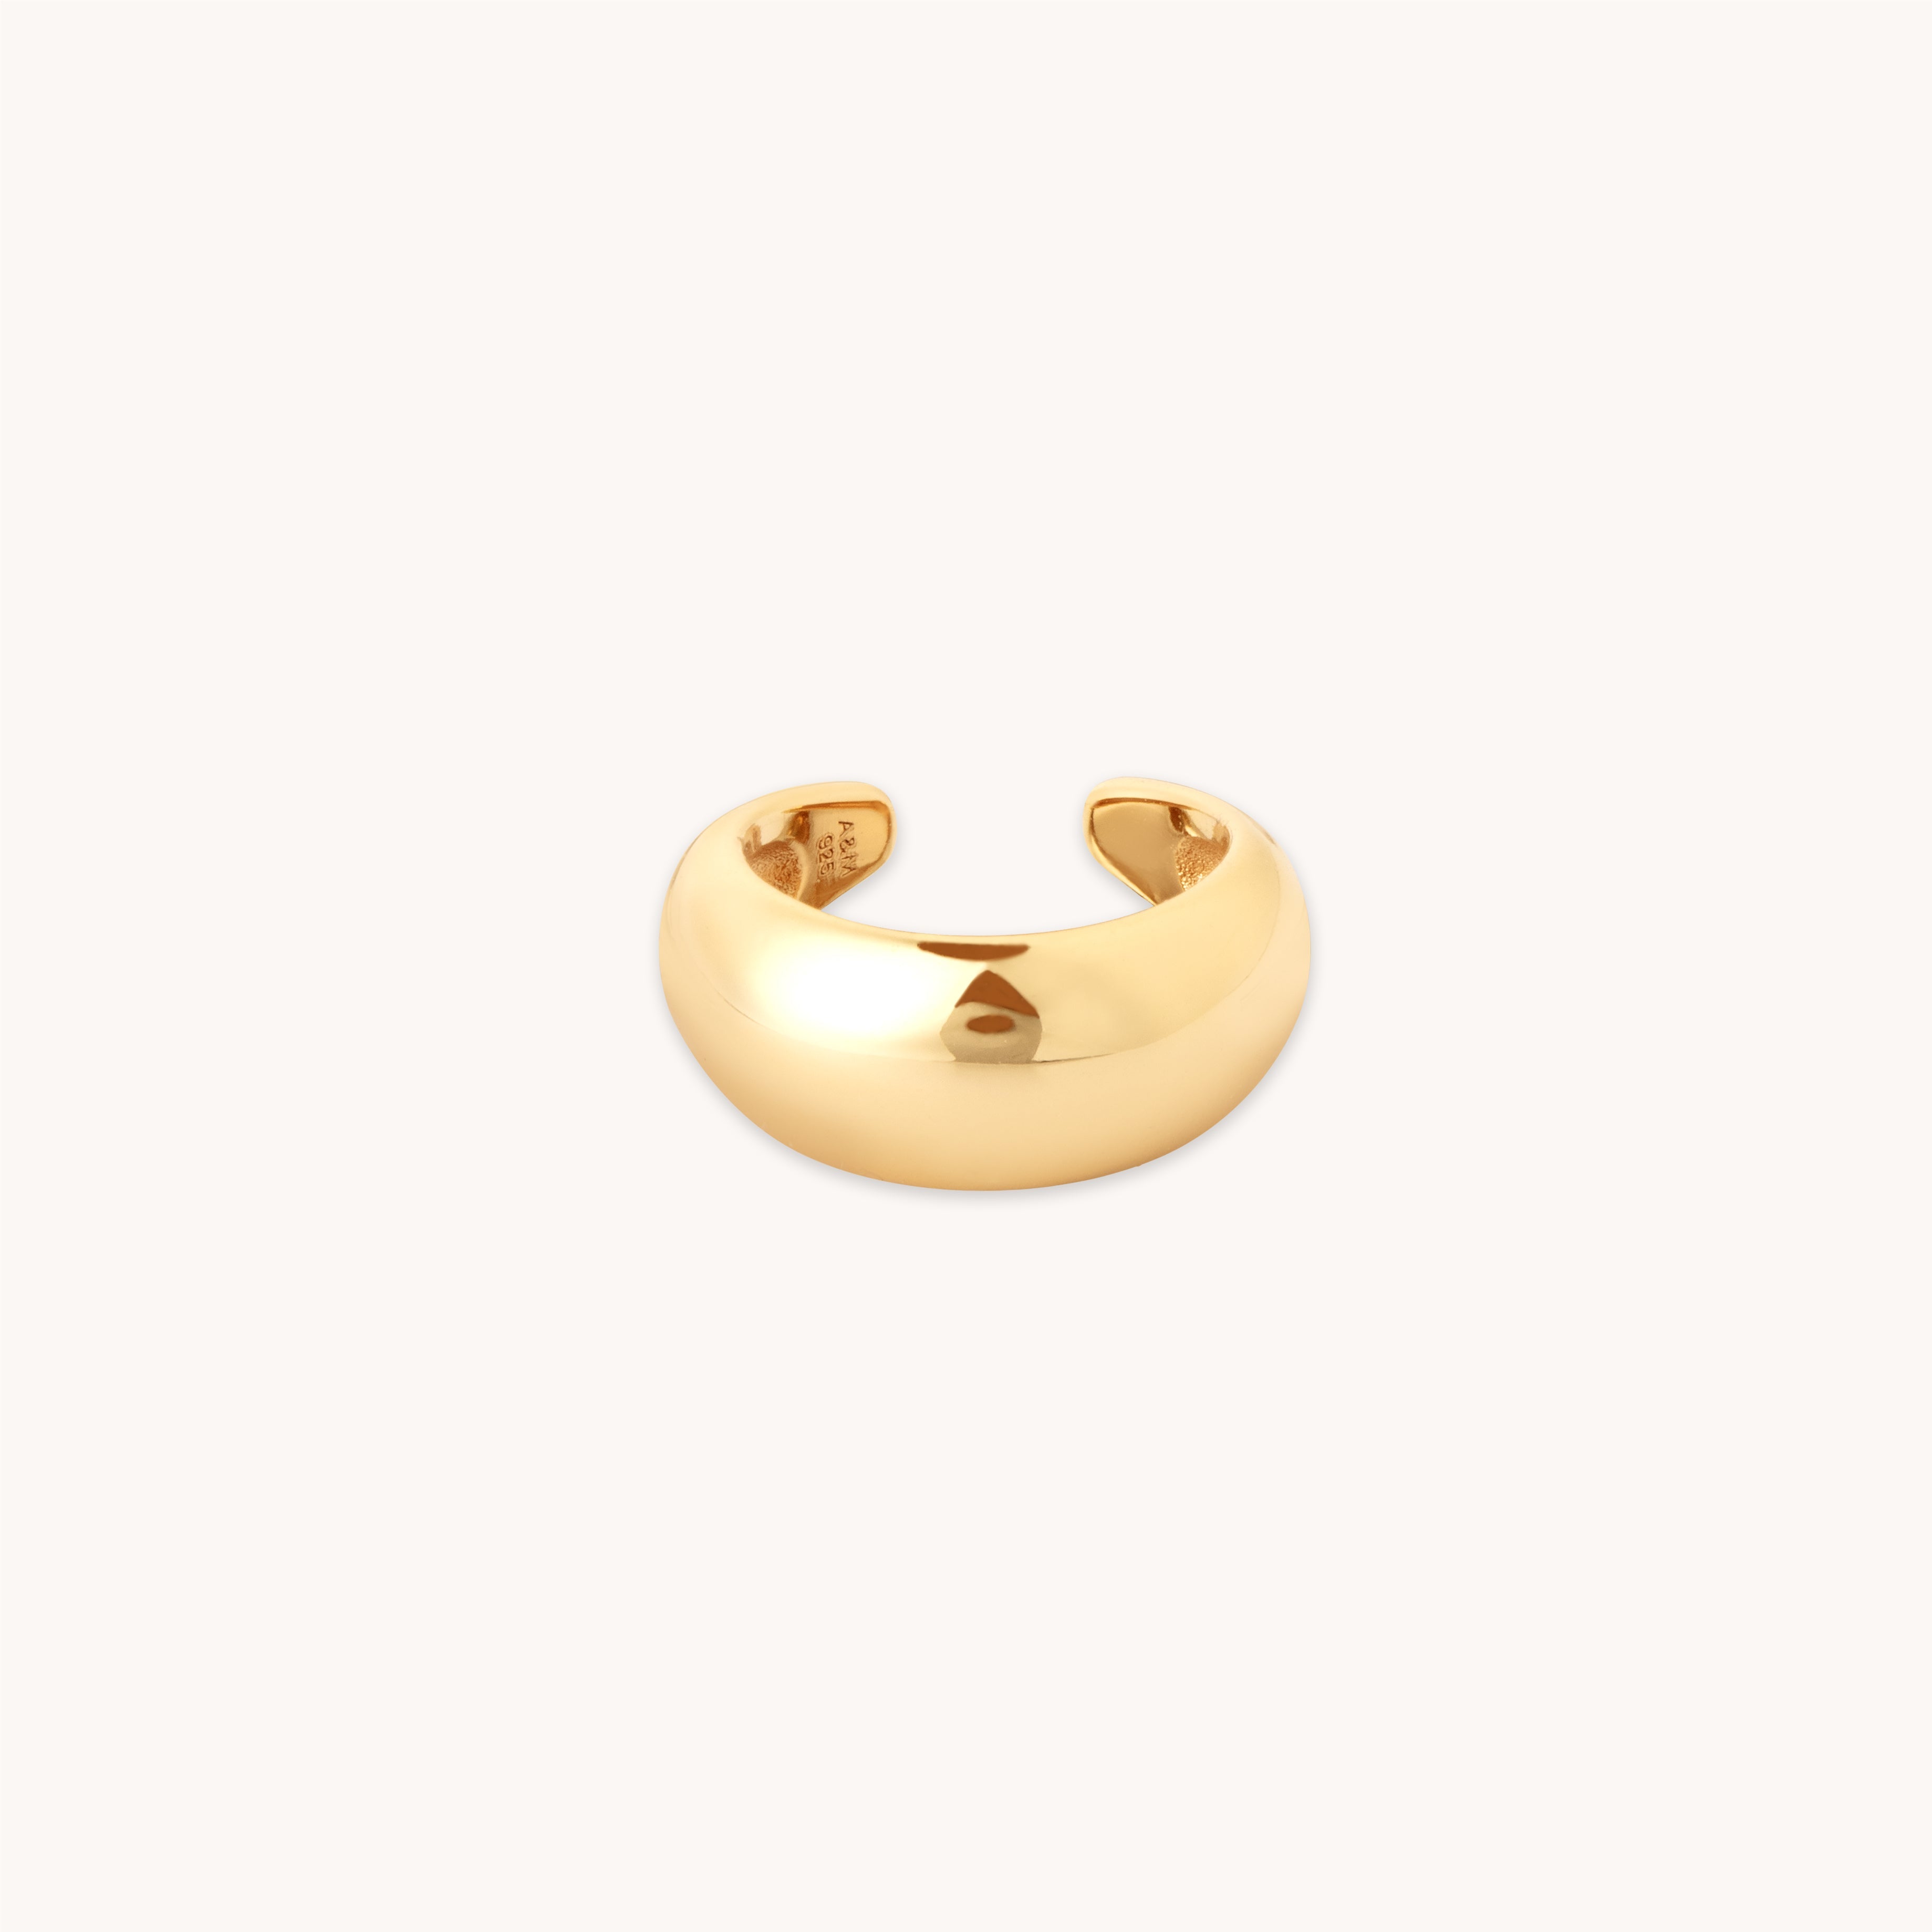 Dome Ear Cuff in Gold